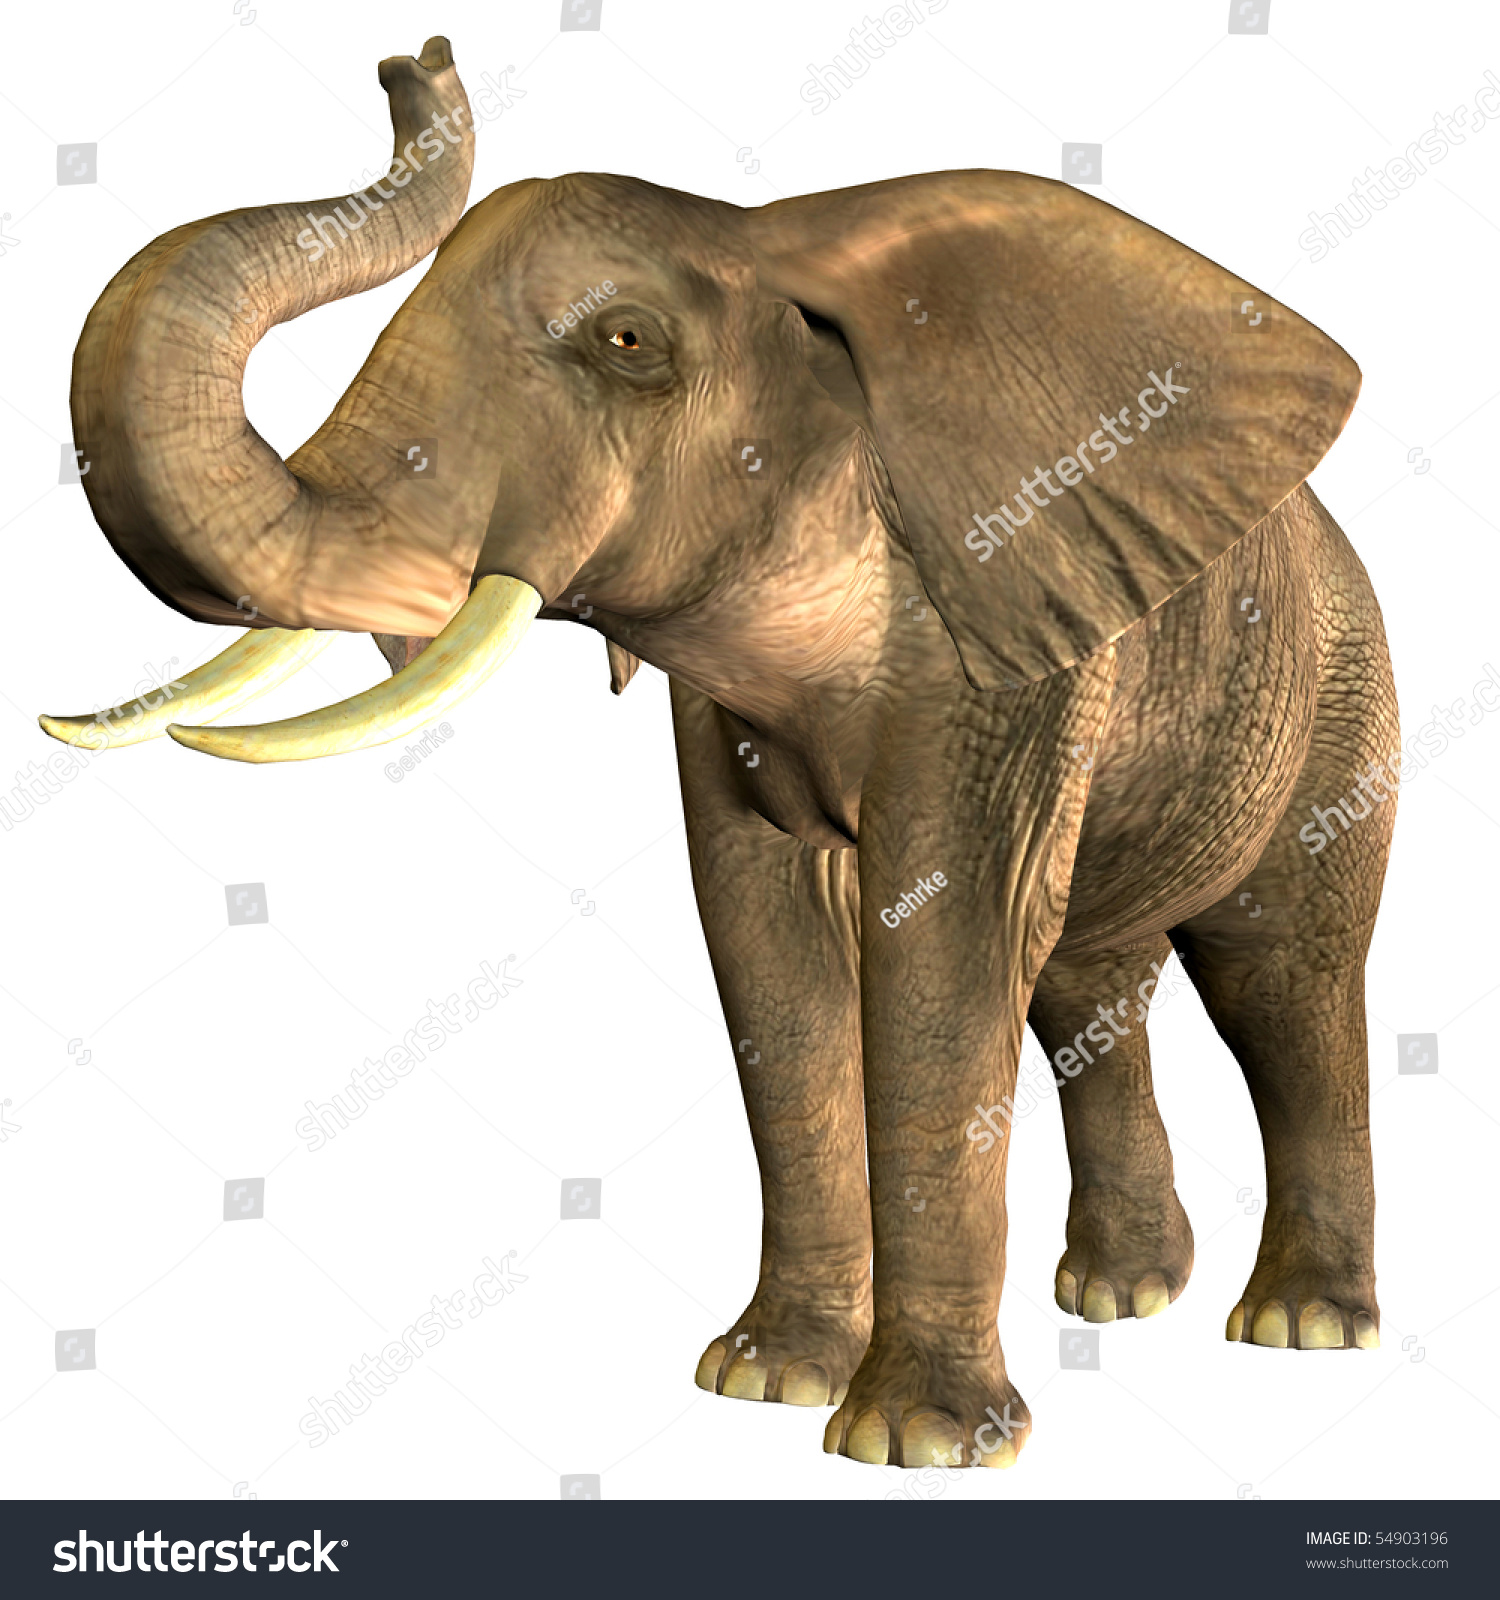 elephant trumpeting clipart - photo #26